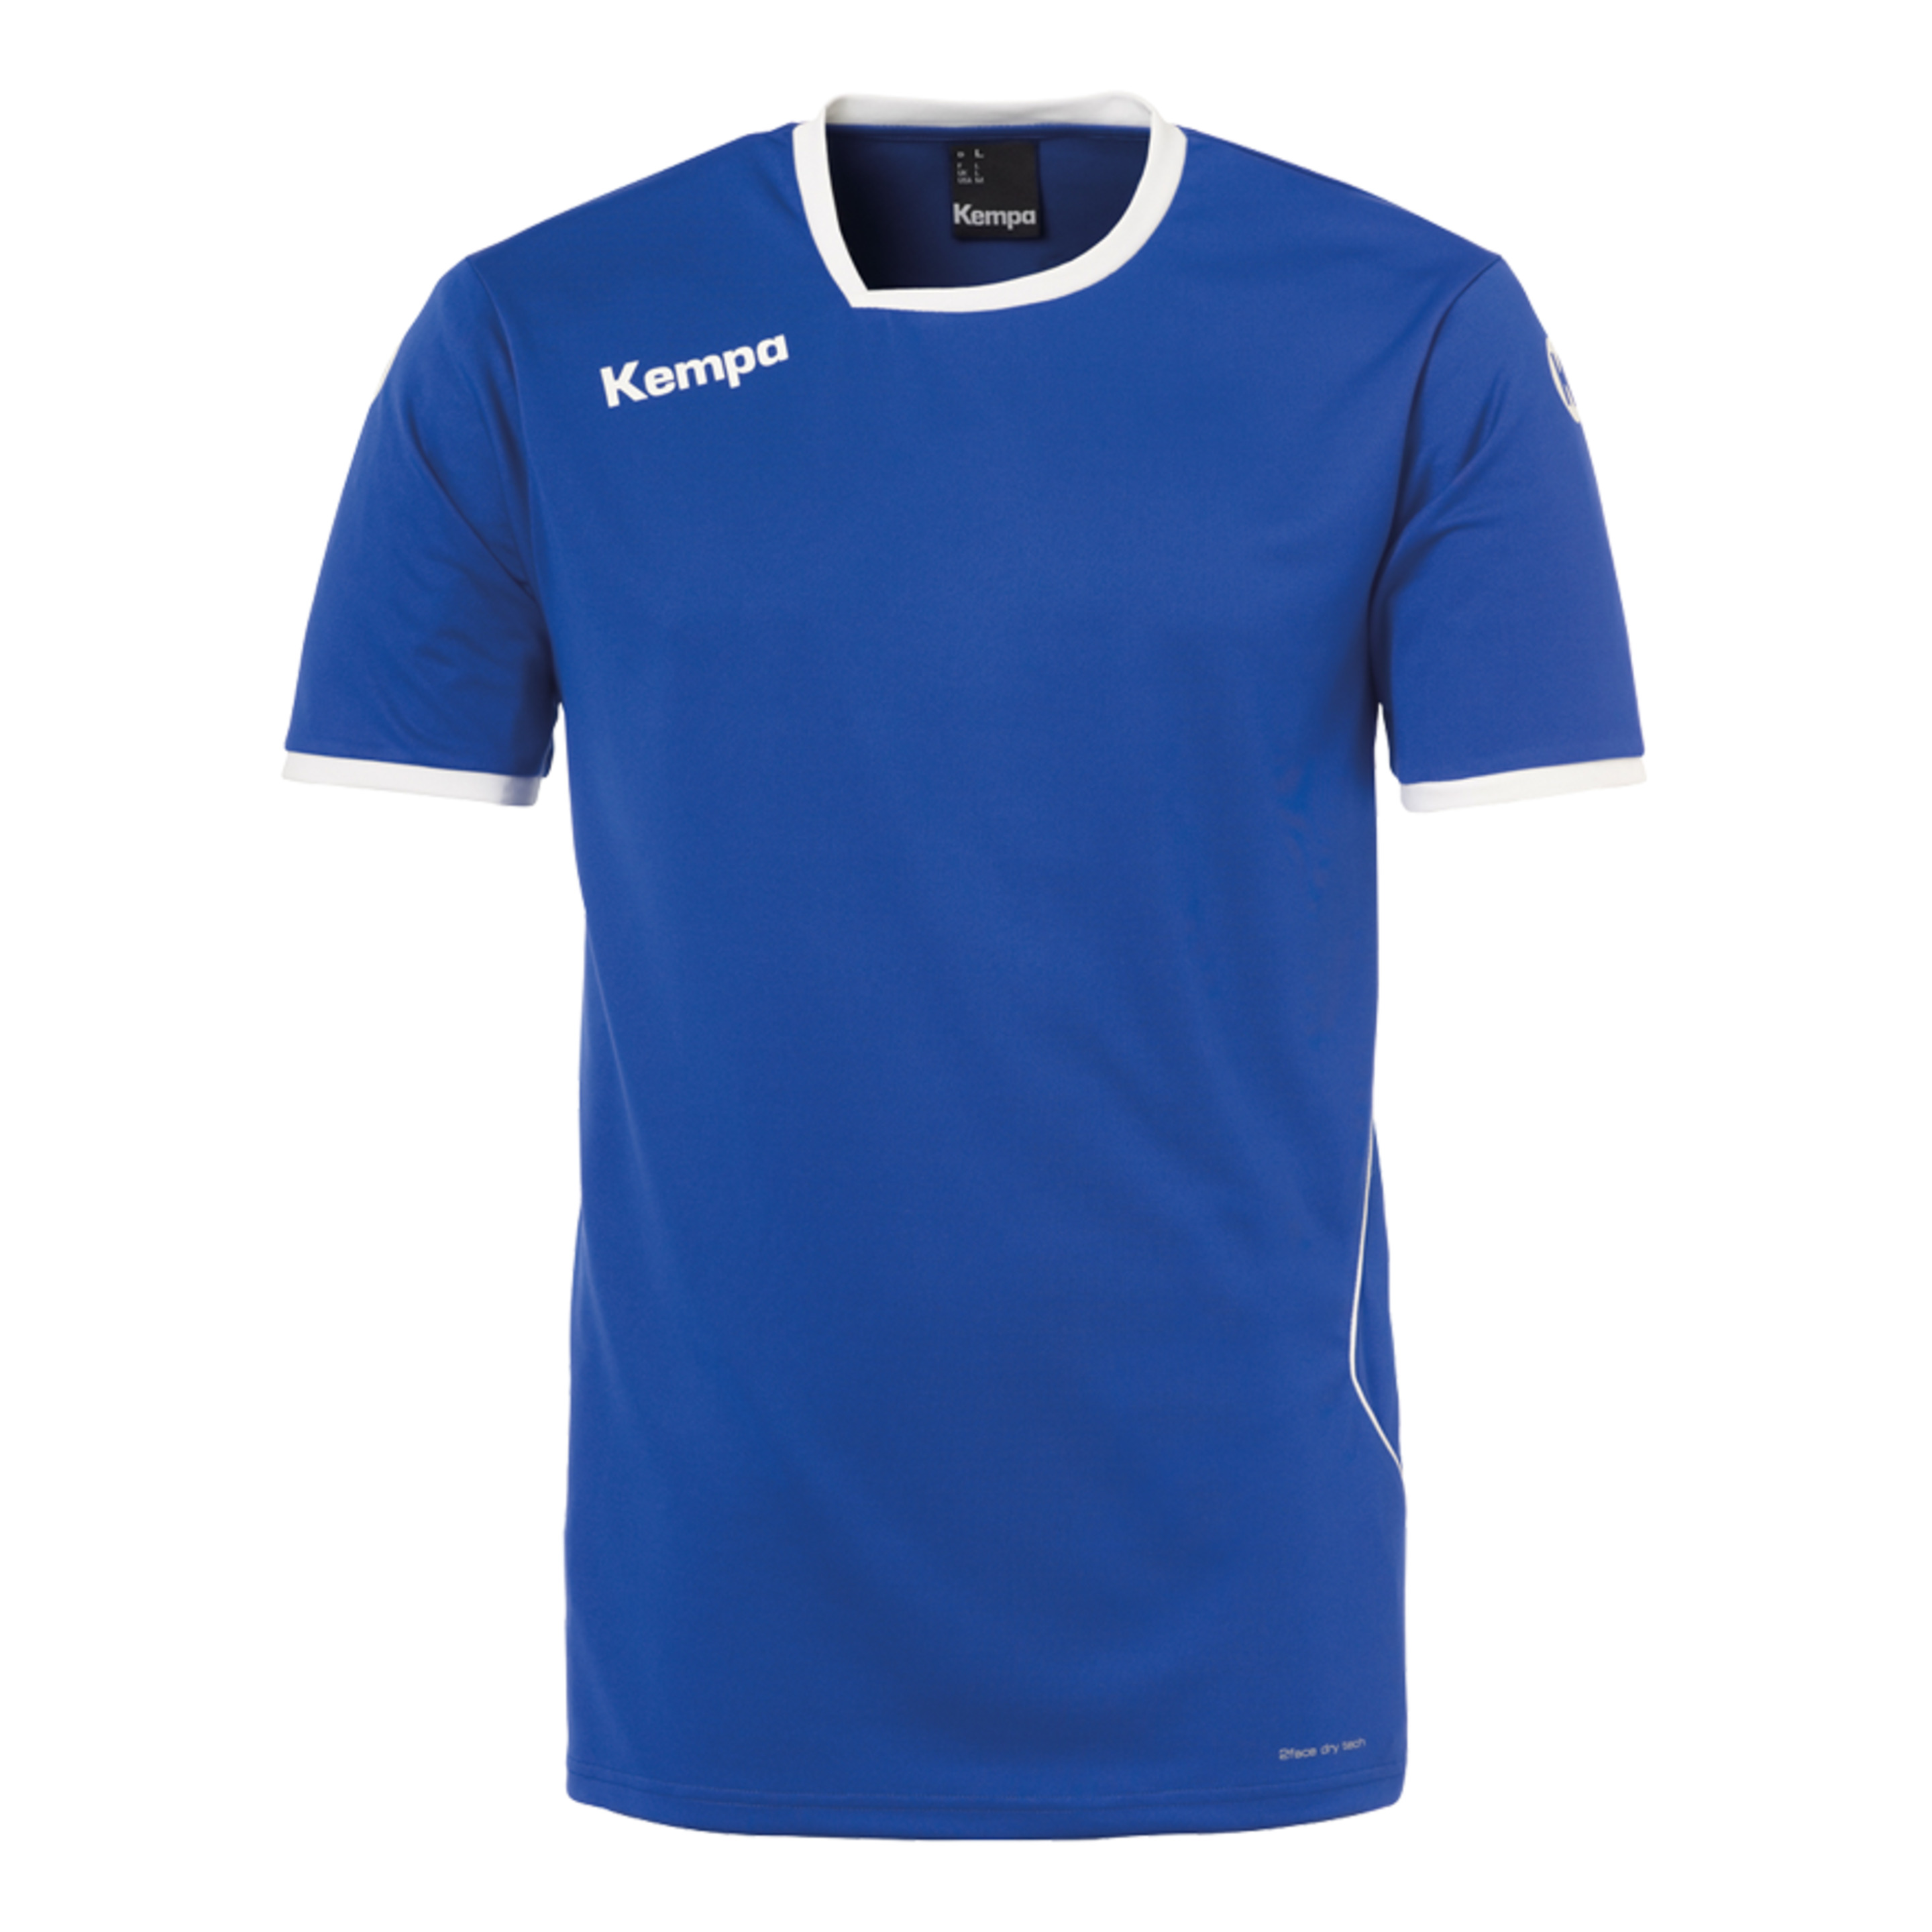 Curve Camiseta Azul Royal/blanco Kempa - azul - 